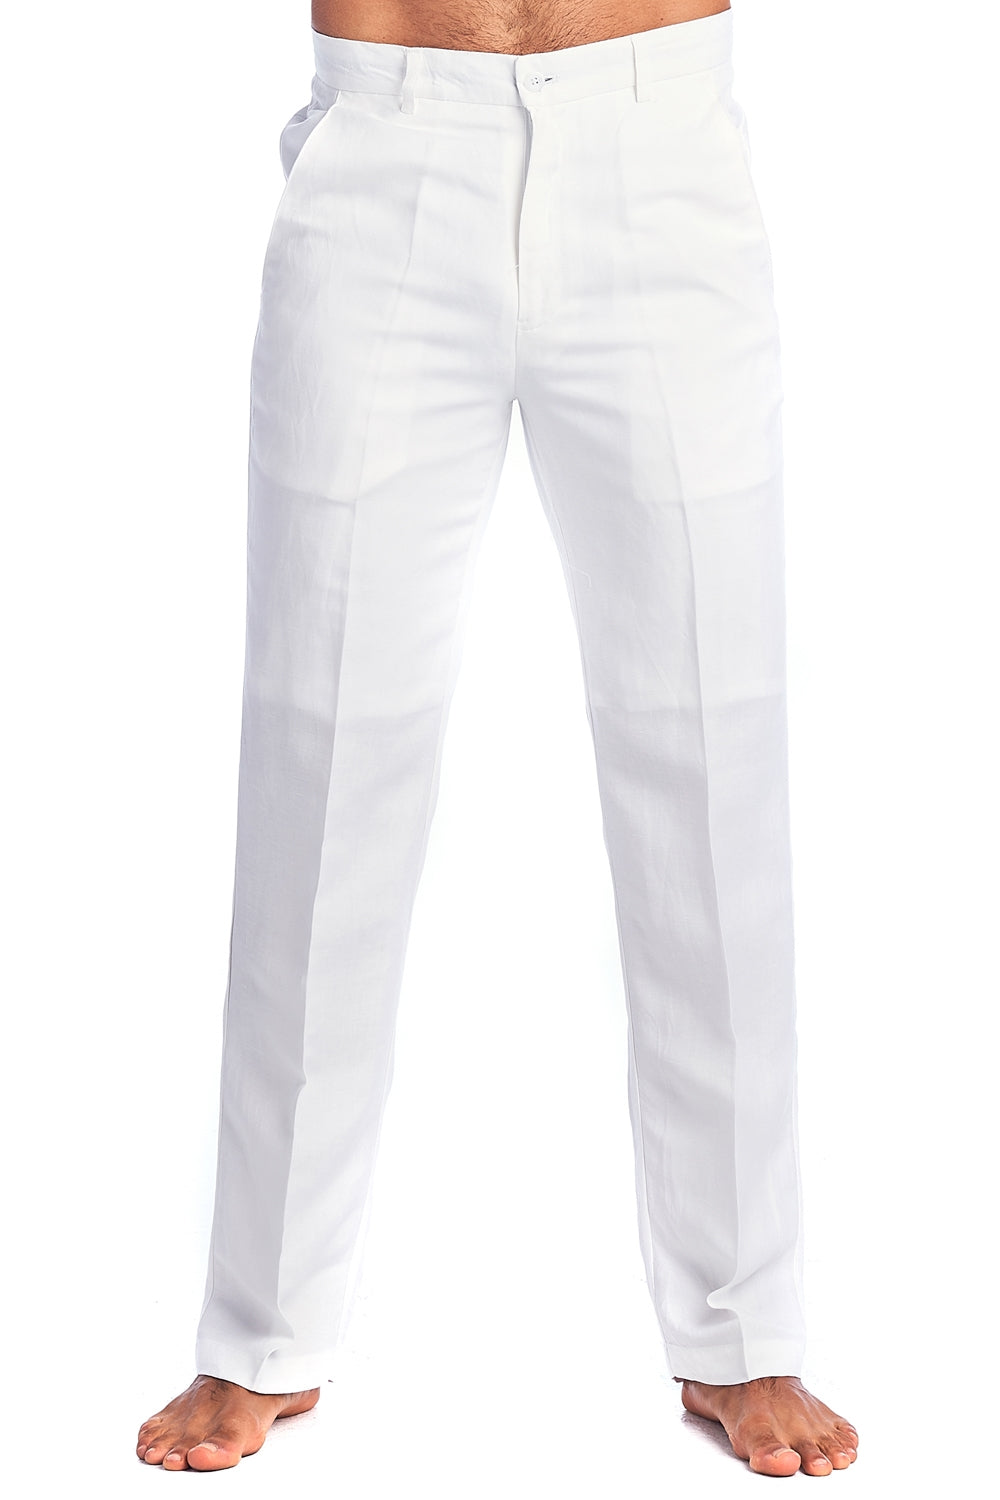 Buy Highlander White Solid Slim Fit Cargos for Men Online at Rs.799 - Ketch